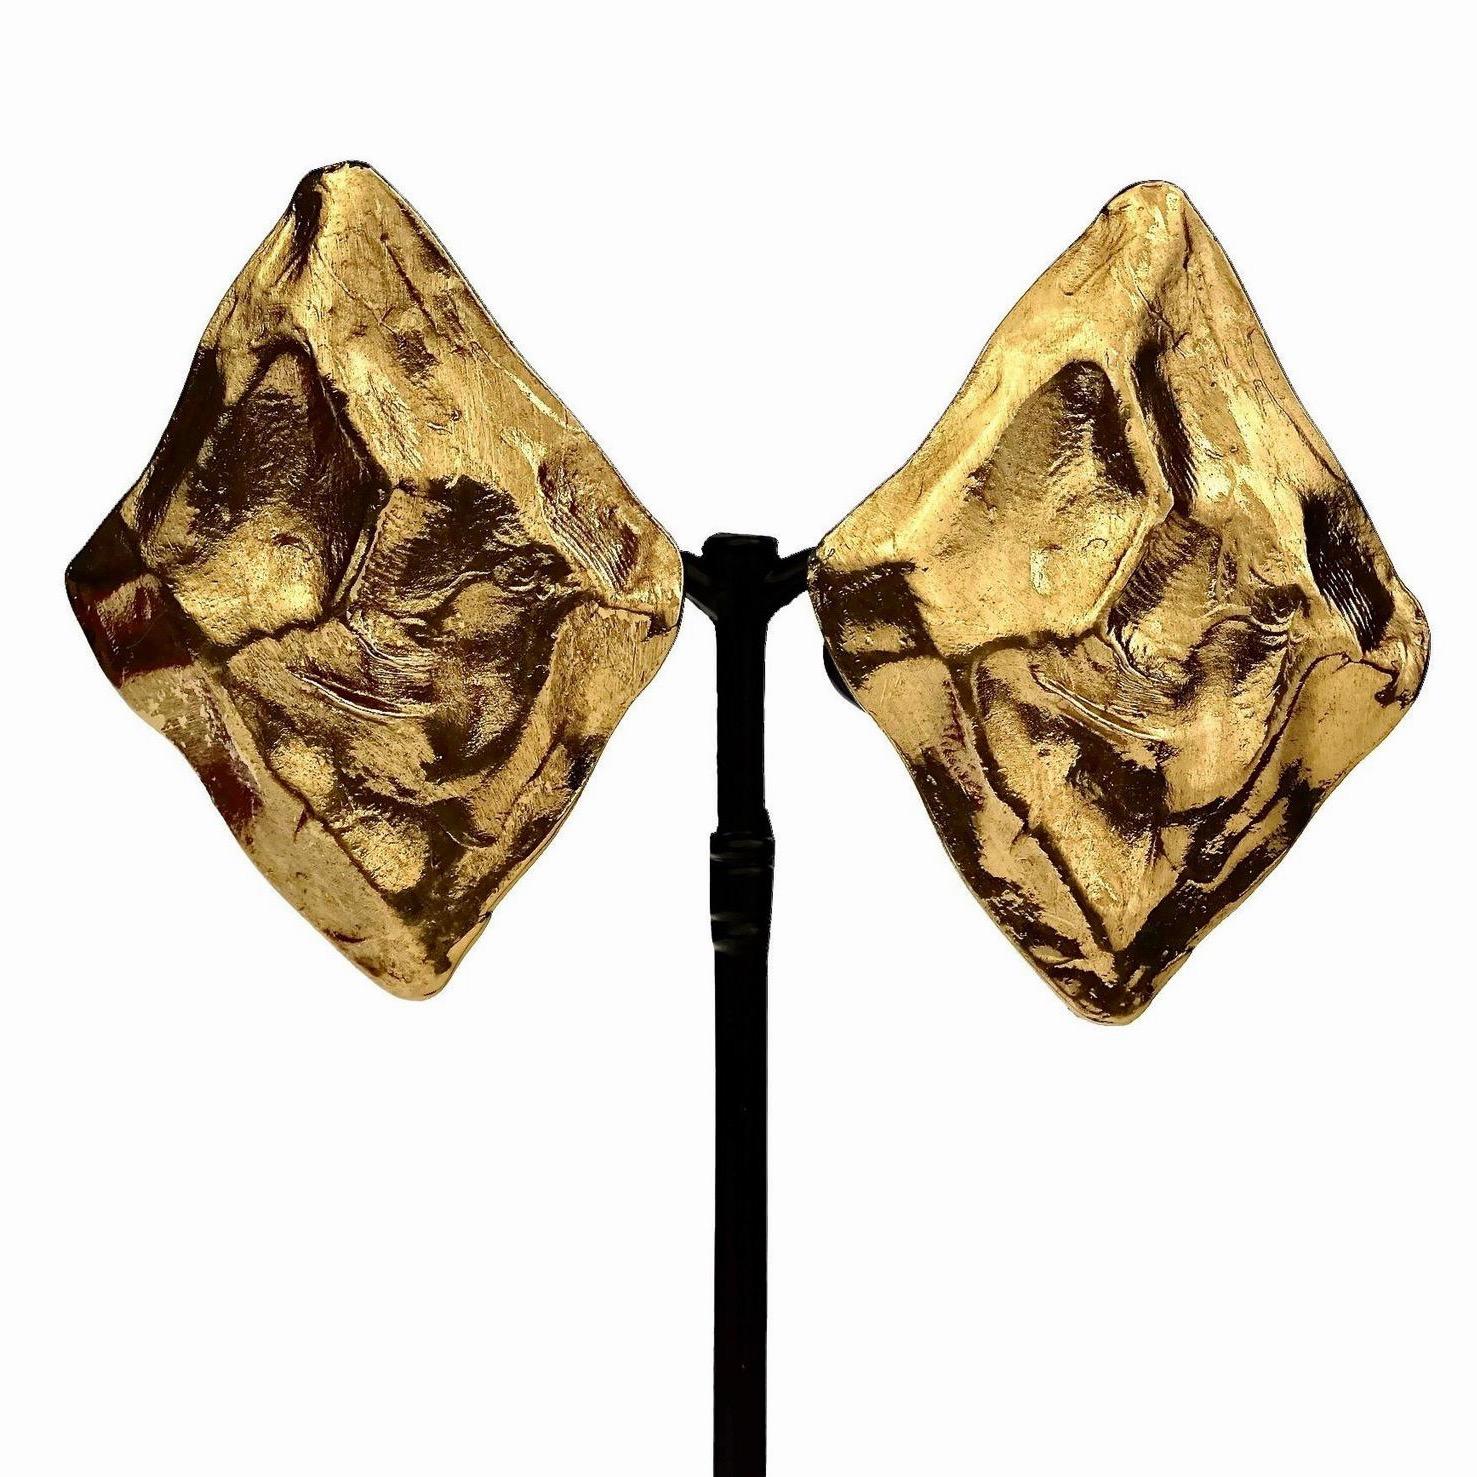 Vintage Massive YVES SAINT LAURENT Ysl Textured Diamond Shape Earrings 1